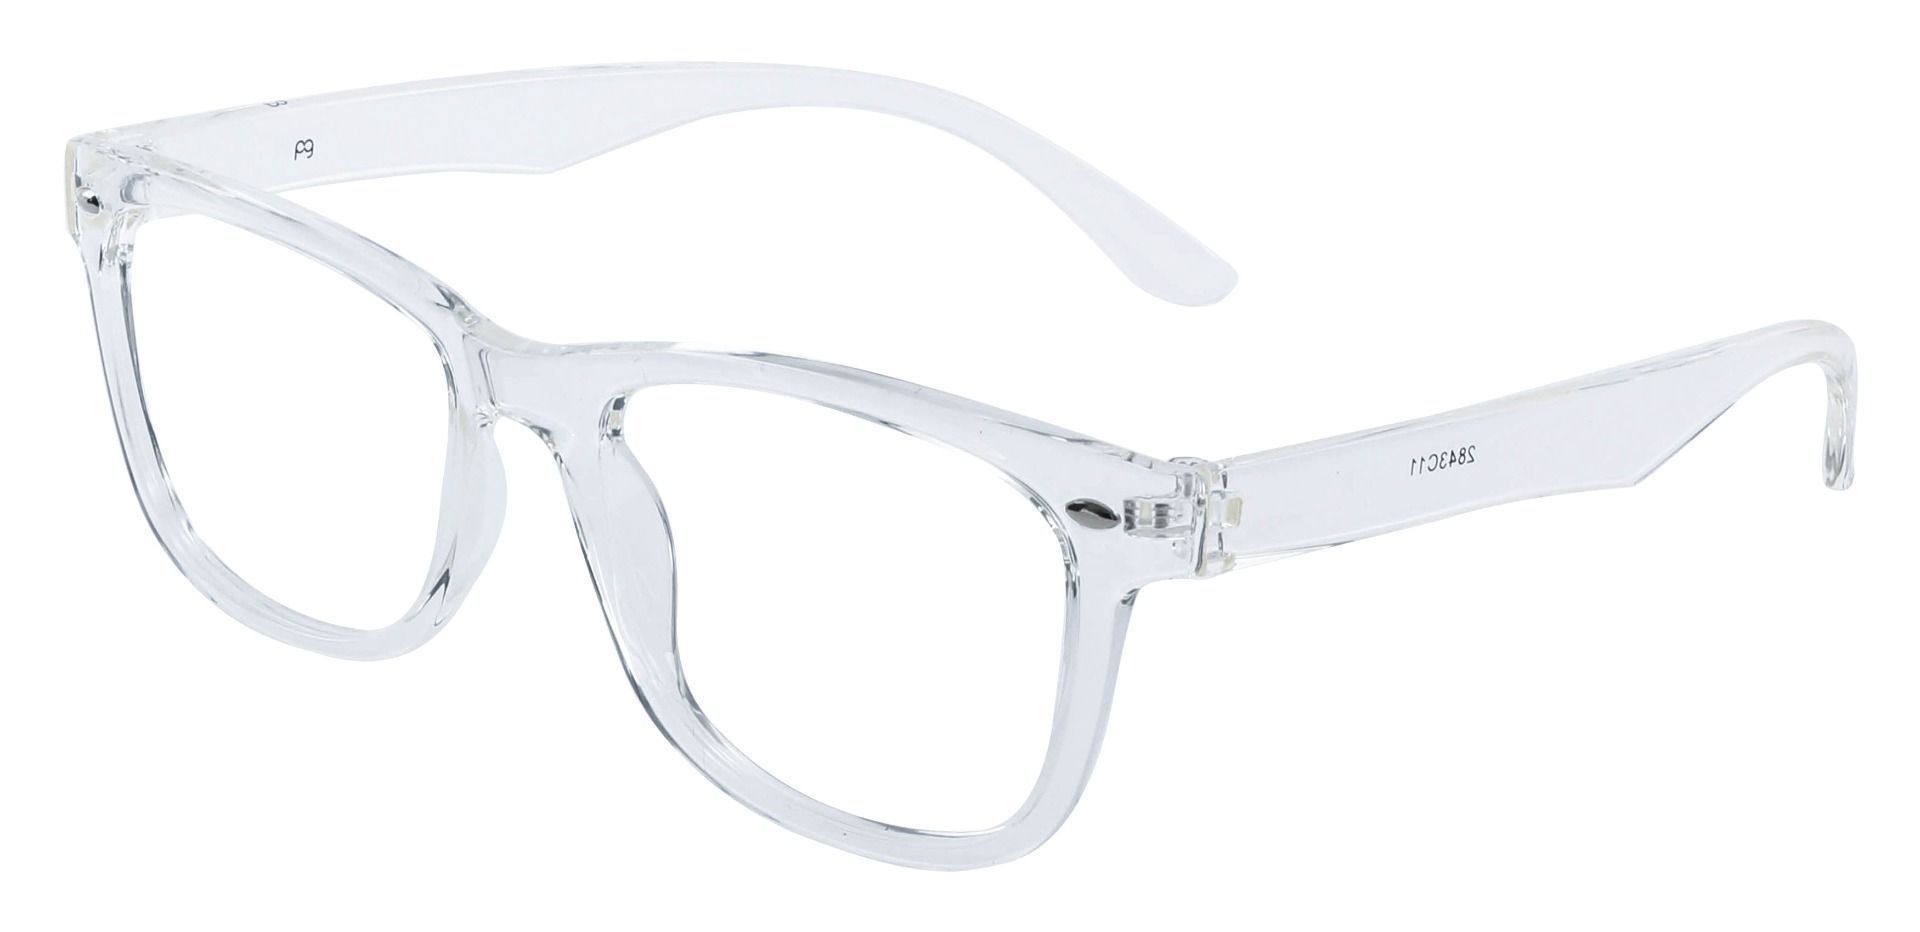 Oscar Rectangle Eyeglasses Frame - Clear